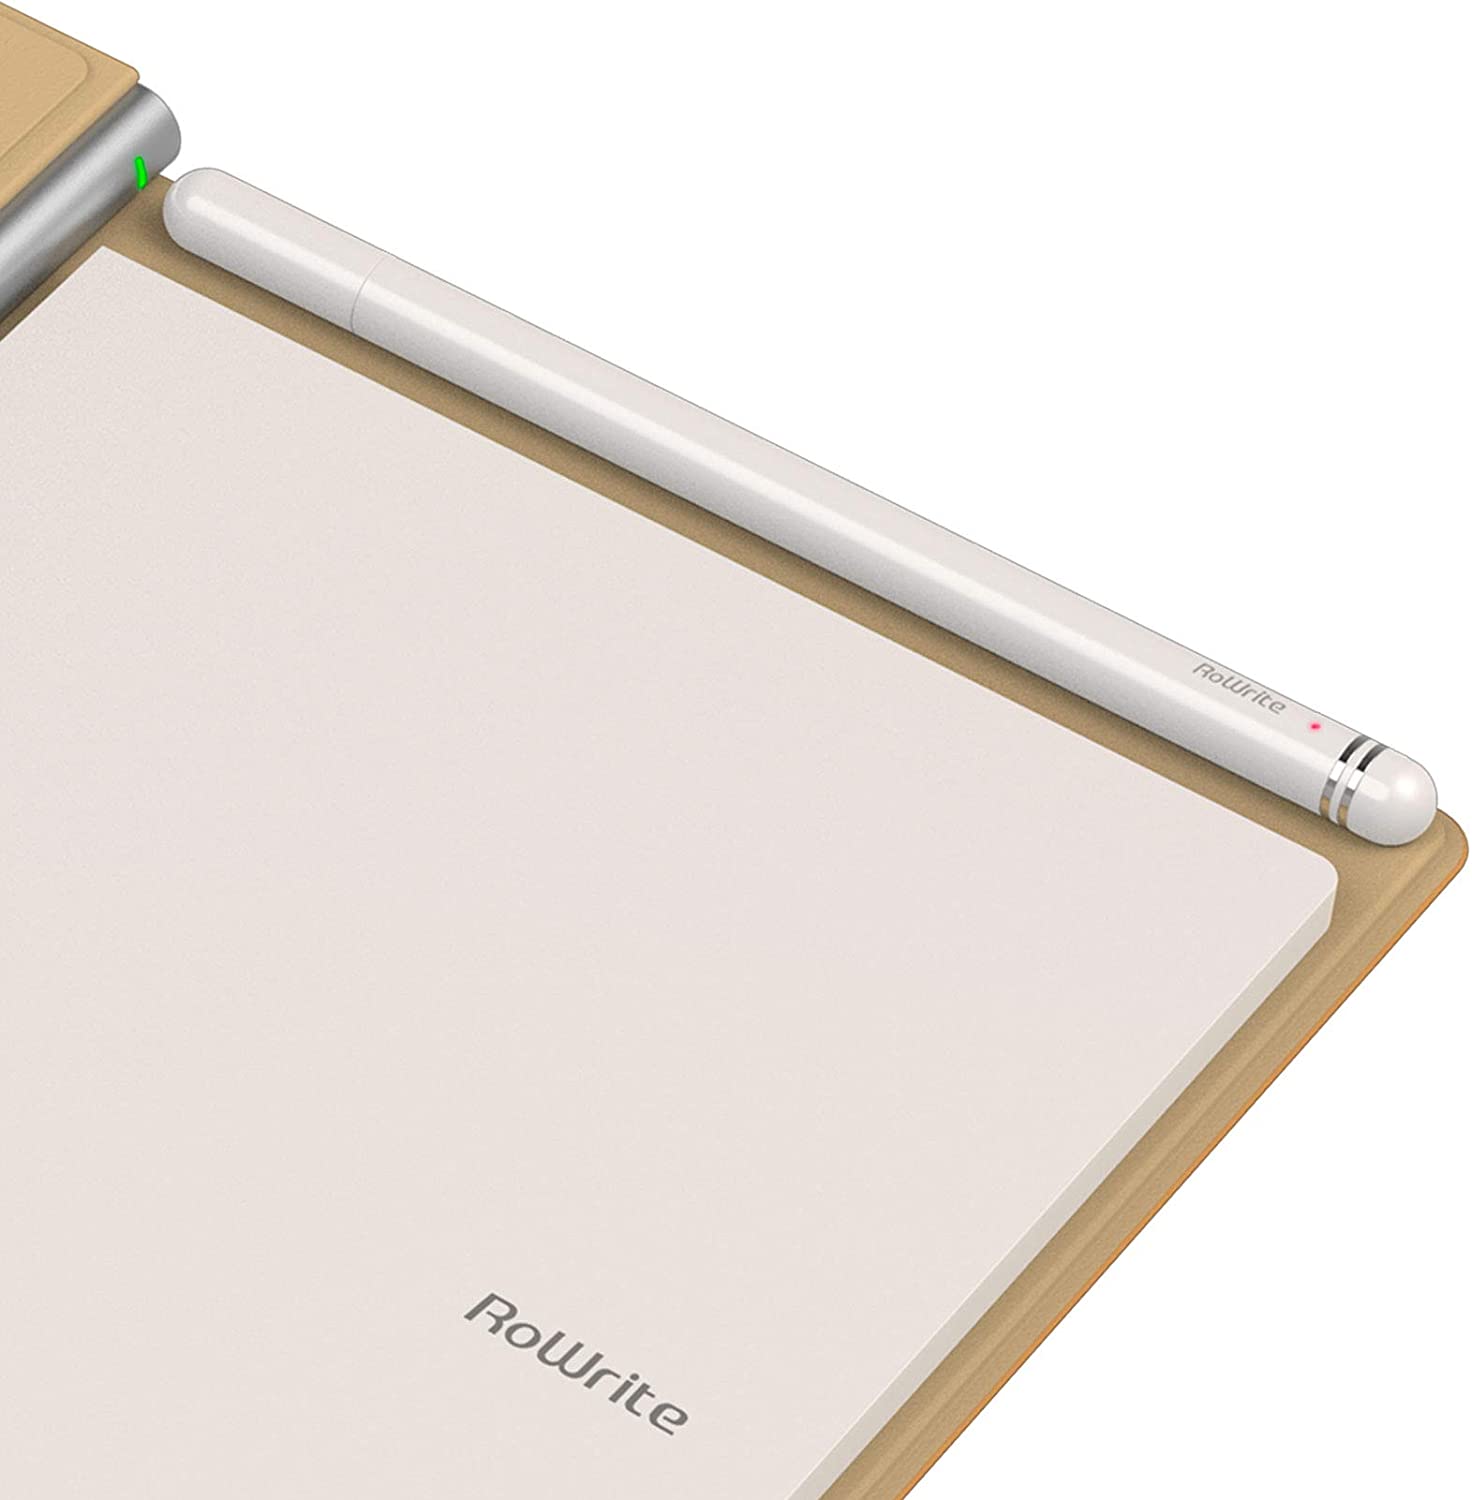 Royole Smart Digital Pen for RoWrite 2 Smart Writing Notebook